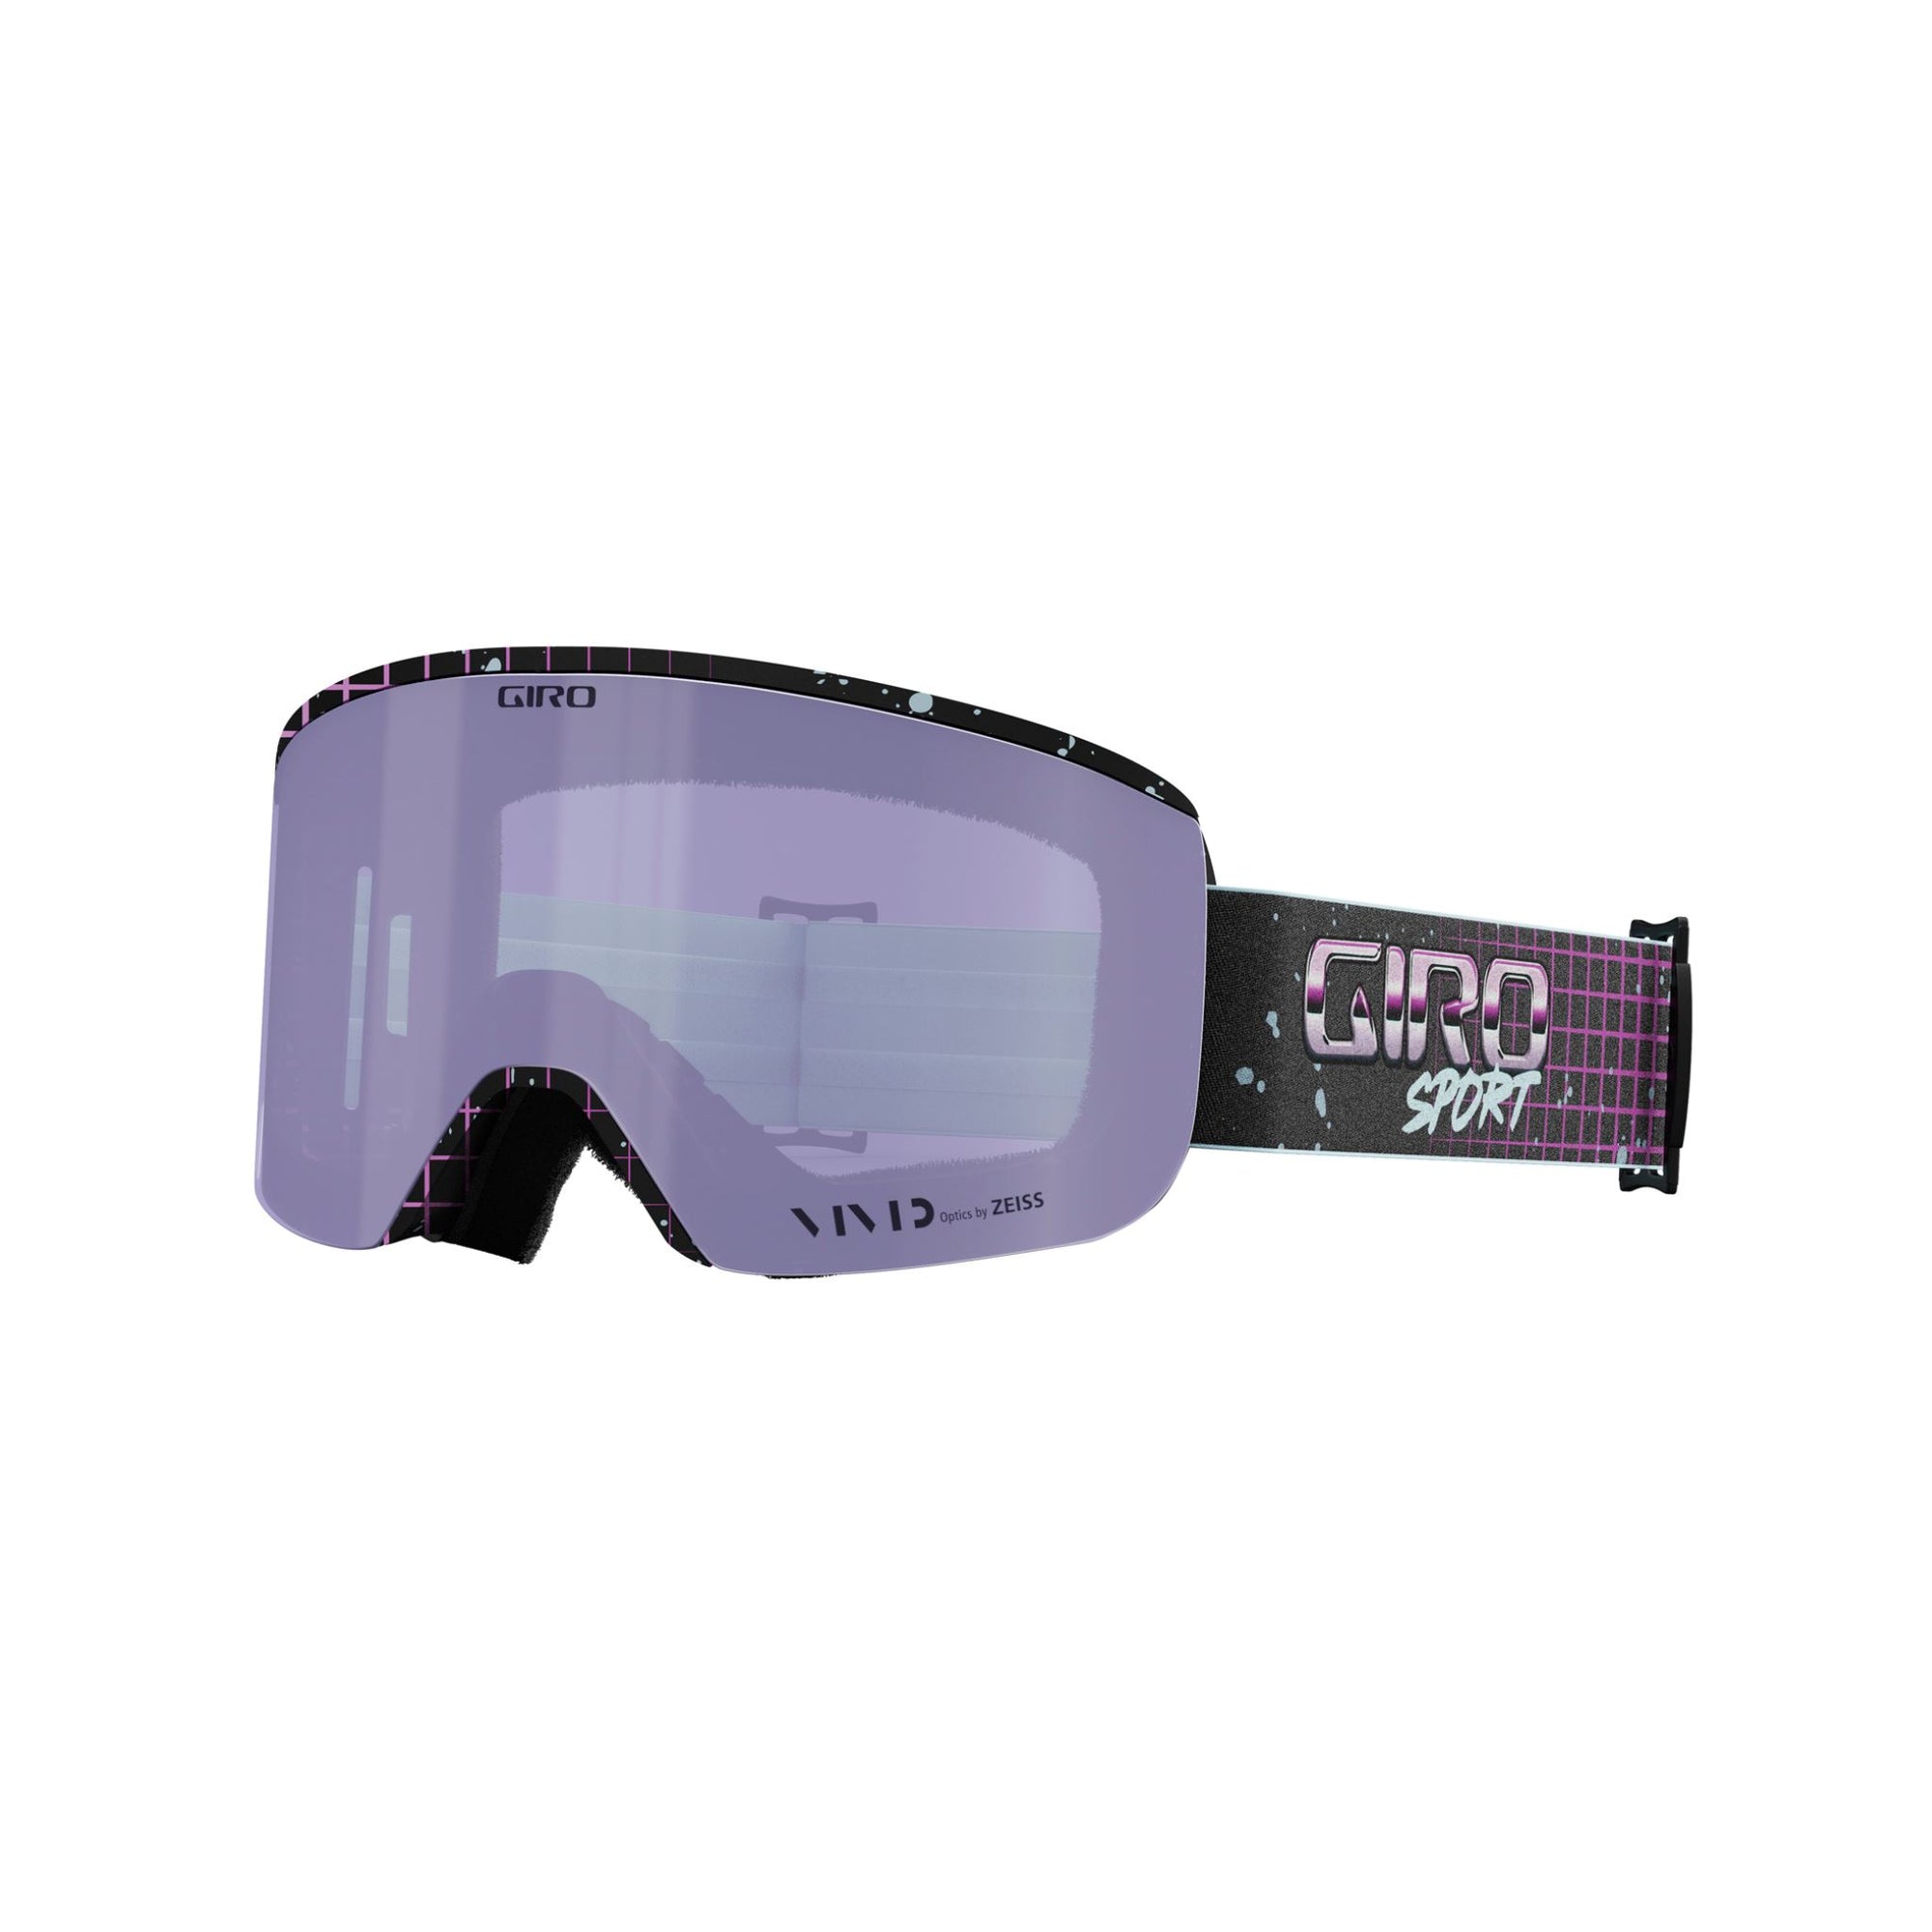 Mens Giro Axis (Medium Fit) Goggles - Purple Syndrome Vivid Haze Goggles Giro 